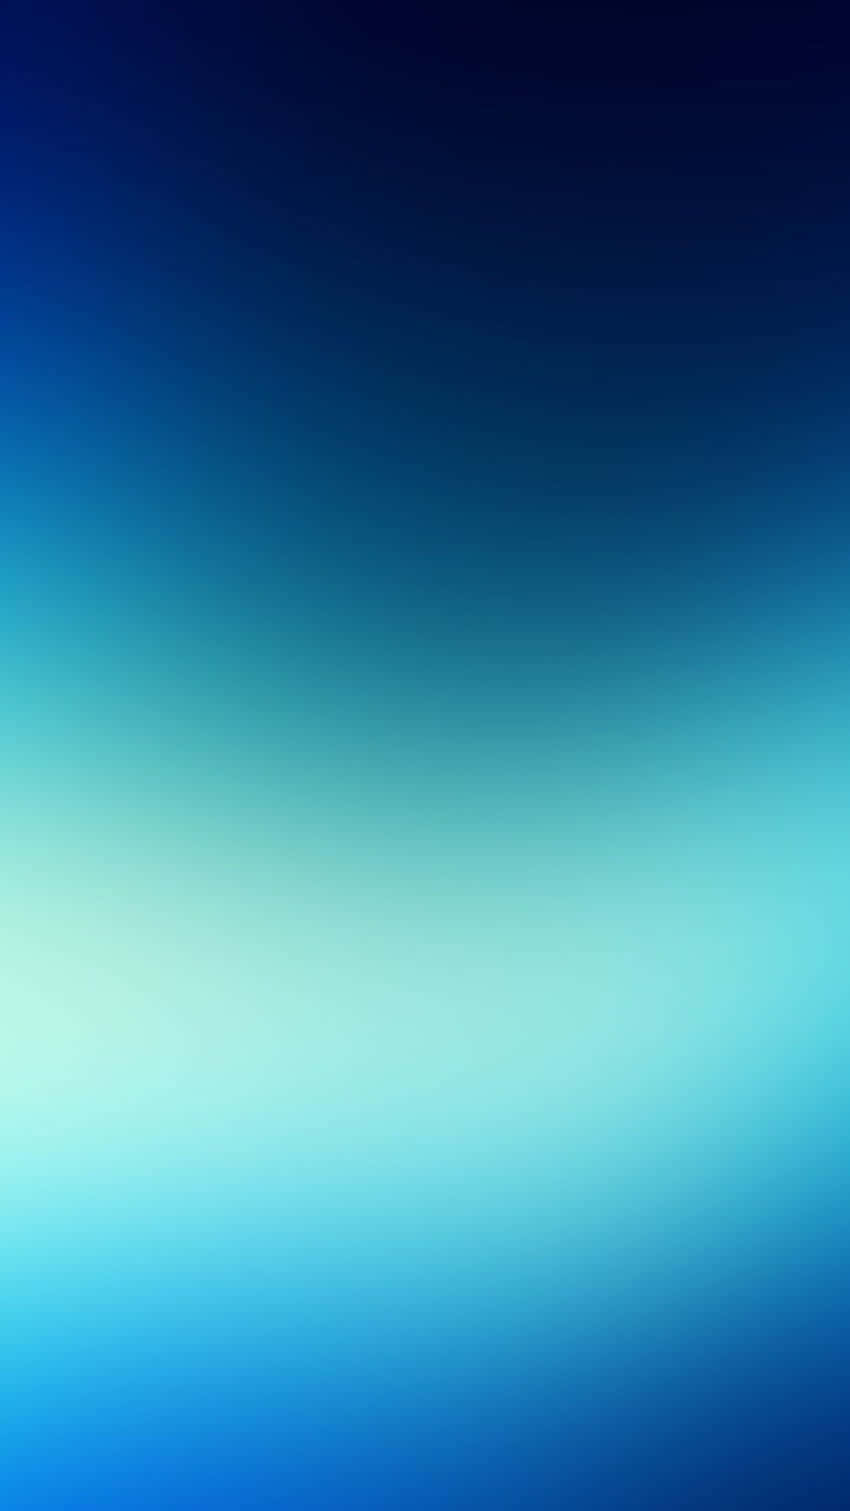 Blue Ombre Gradient Background Wallpaper